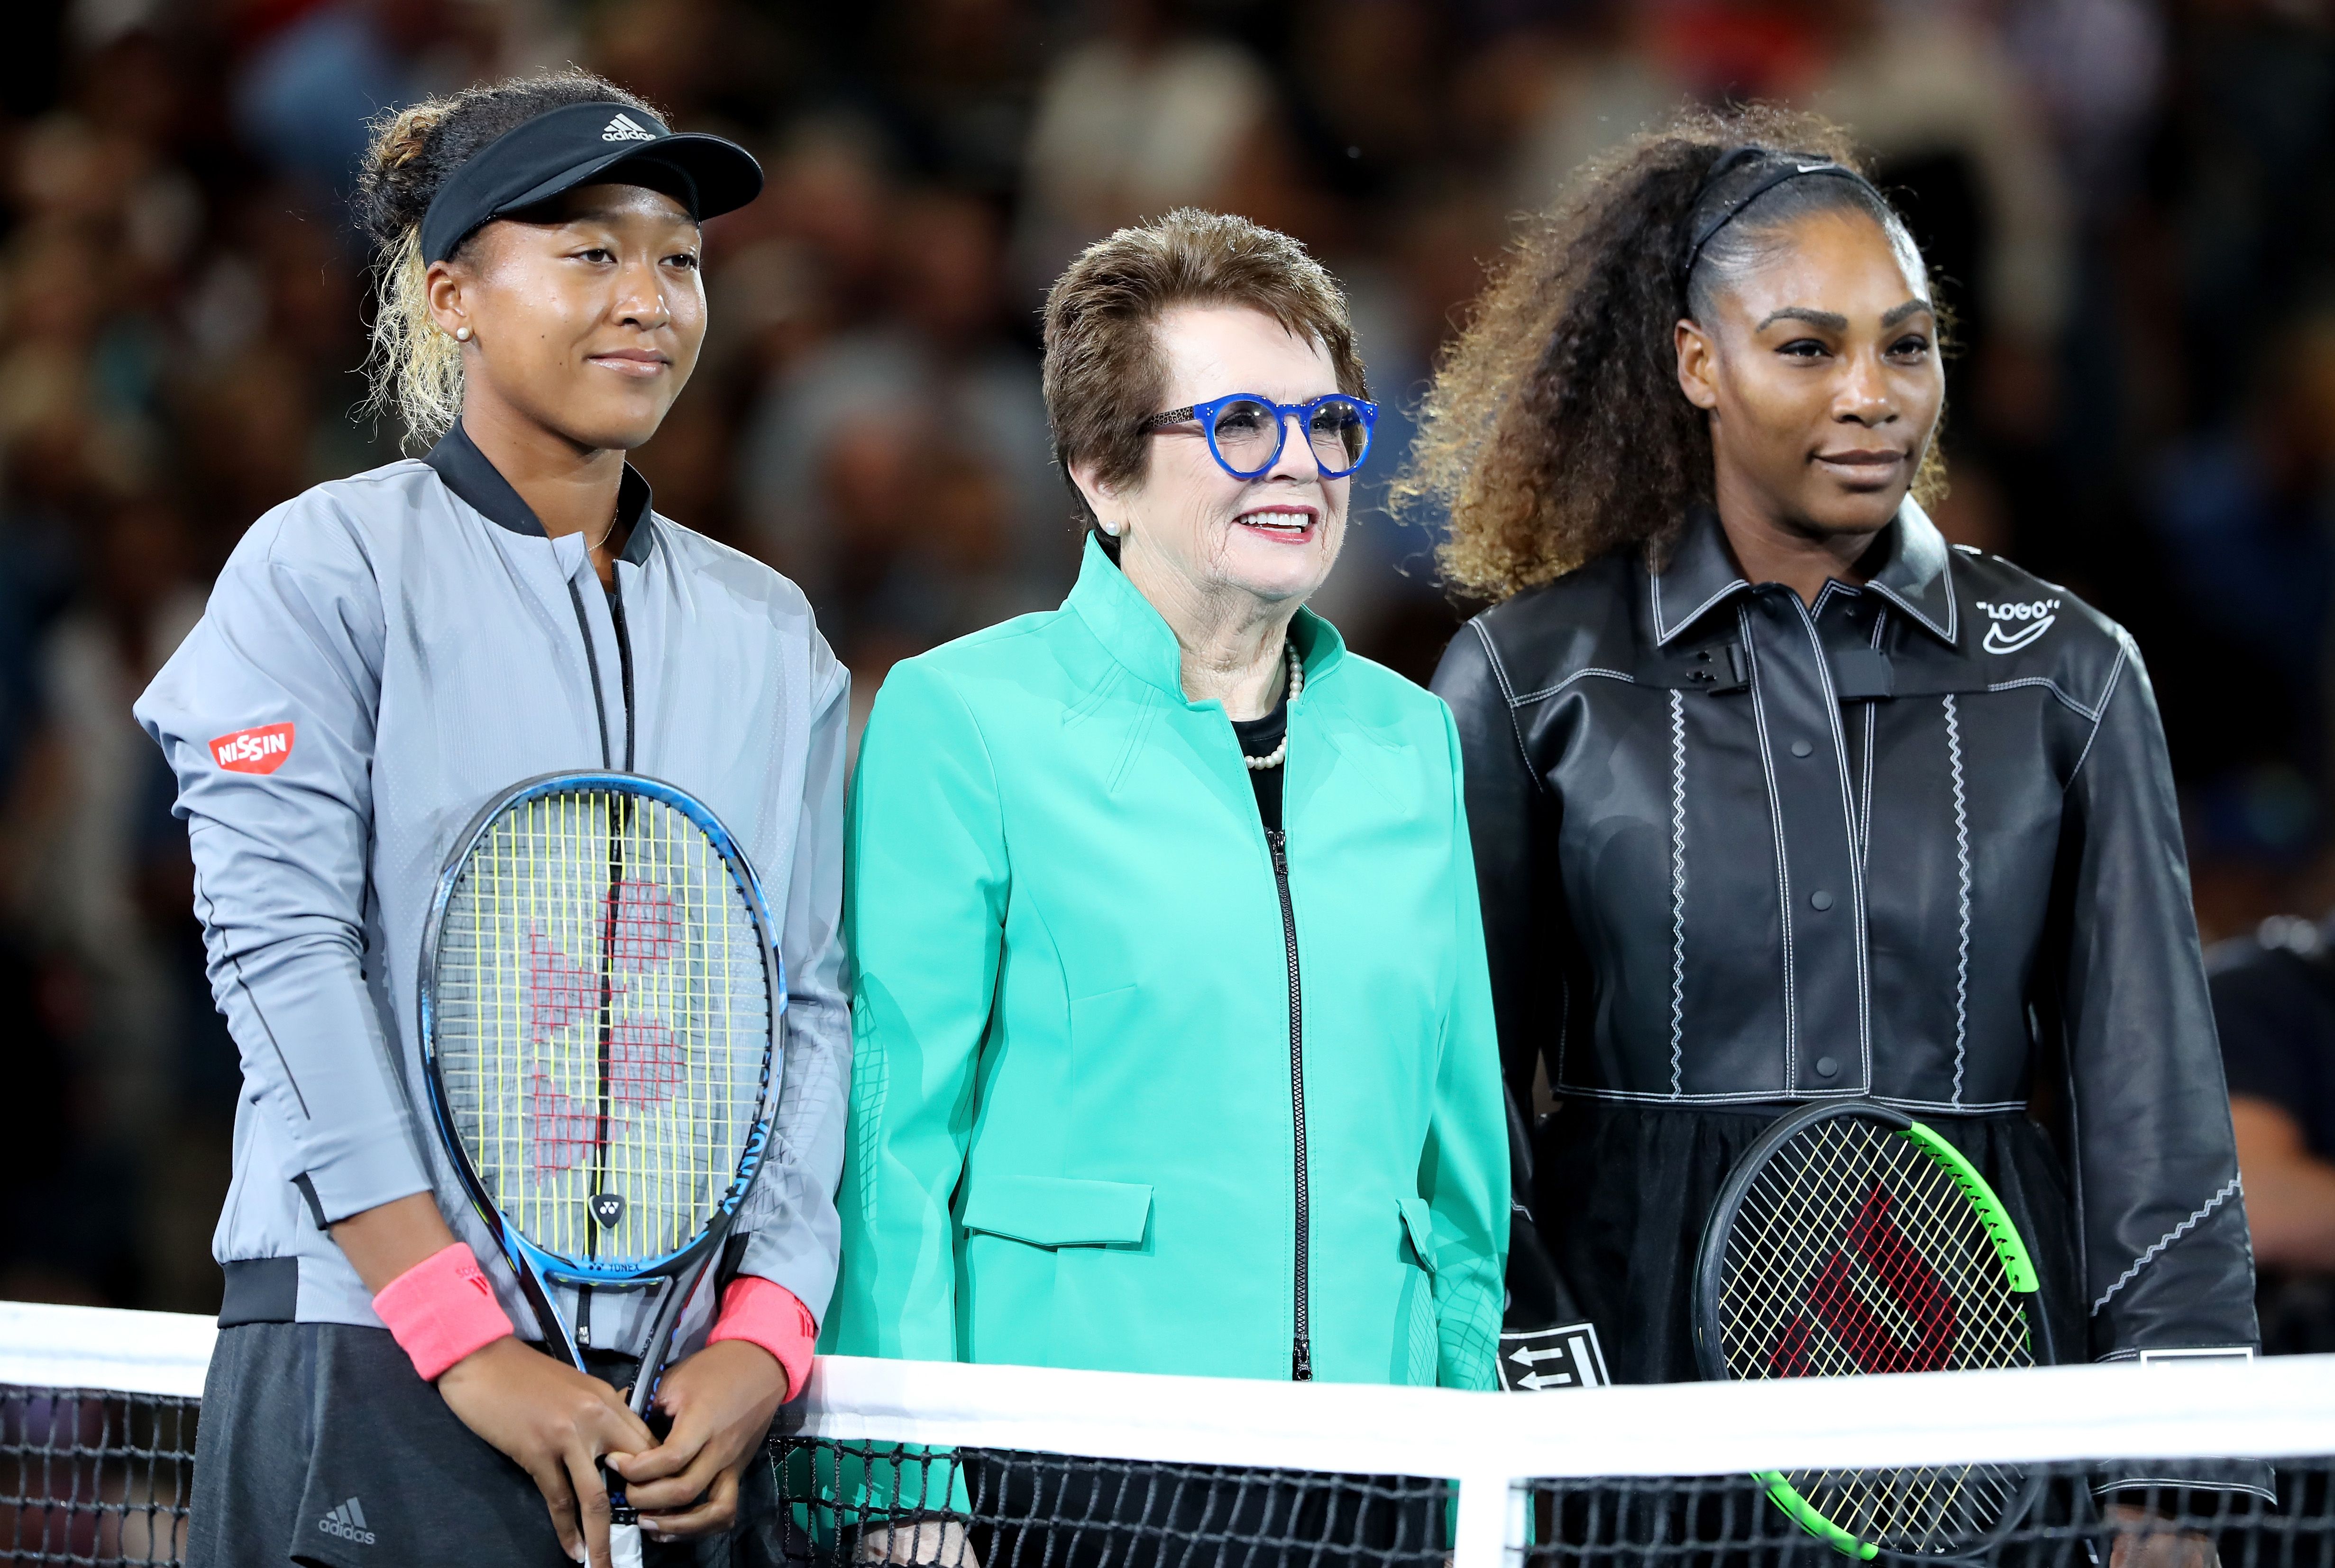 Jean King Serena Williams, Slams Sexist Double in Tennis